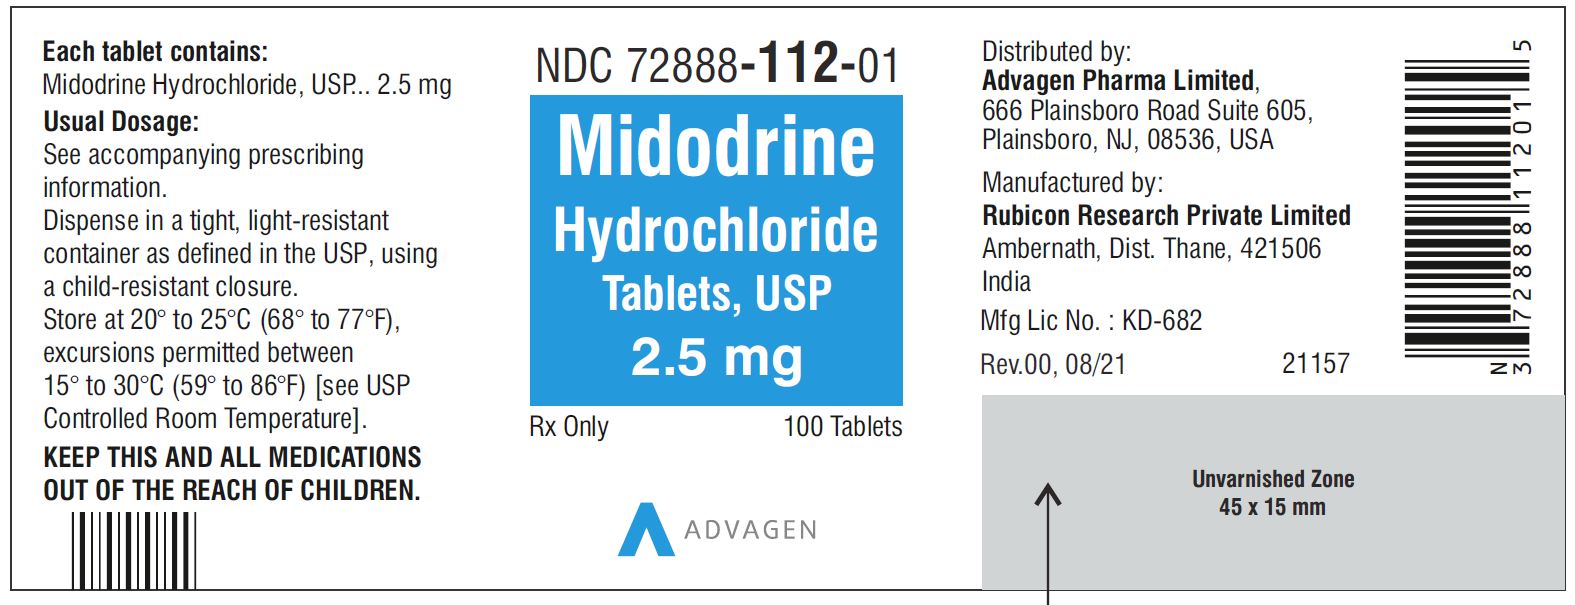 Midodrine Hydrochloride Tablets, USP 2.5mg - 100 Tablets - NDC 72888-112-01